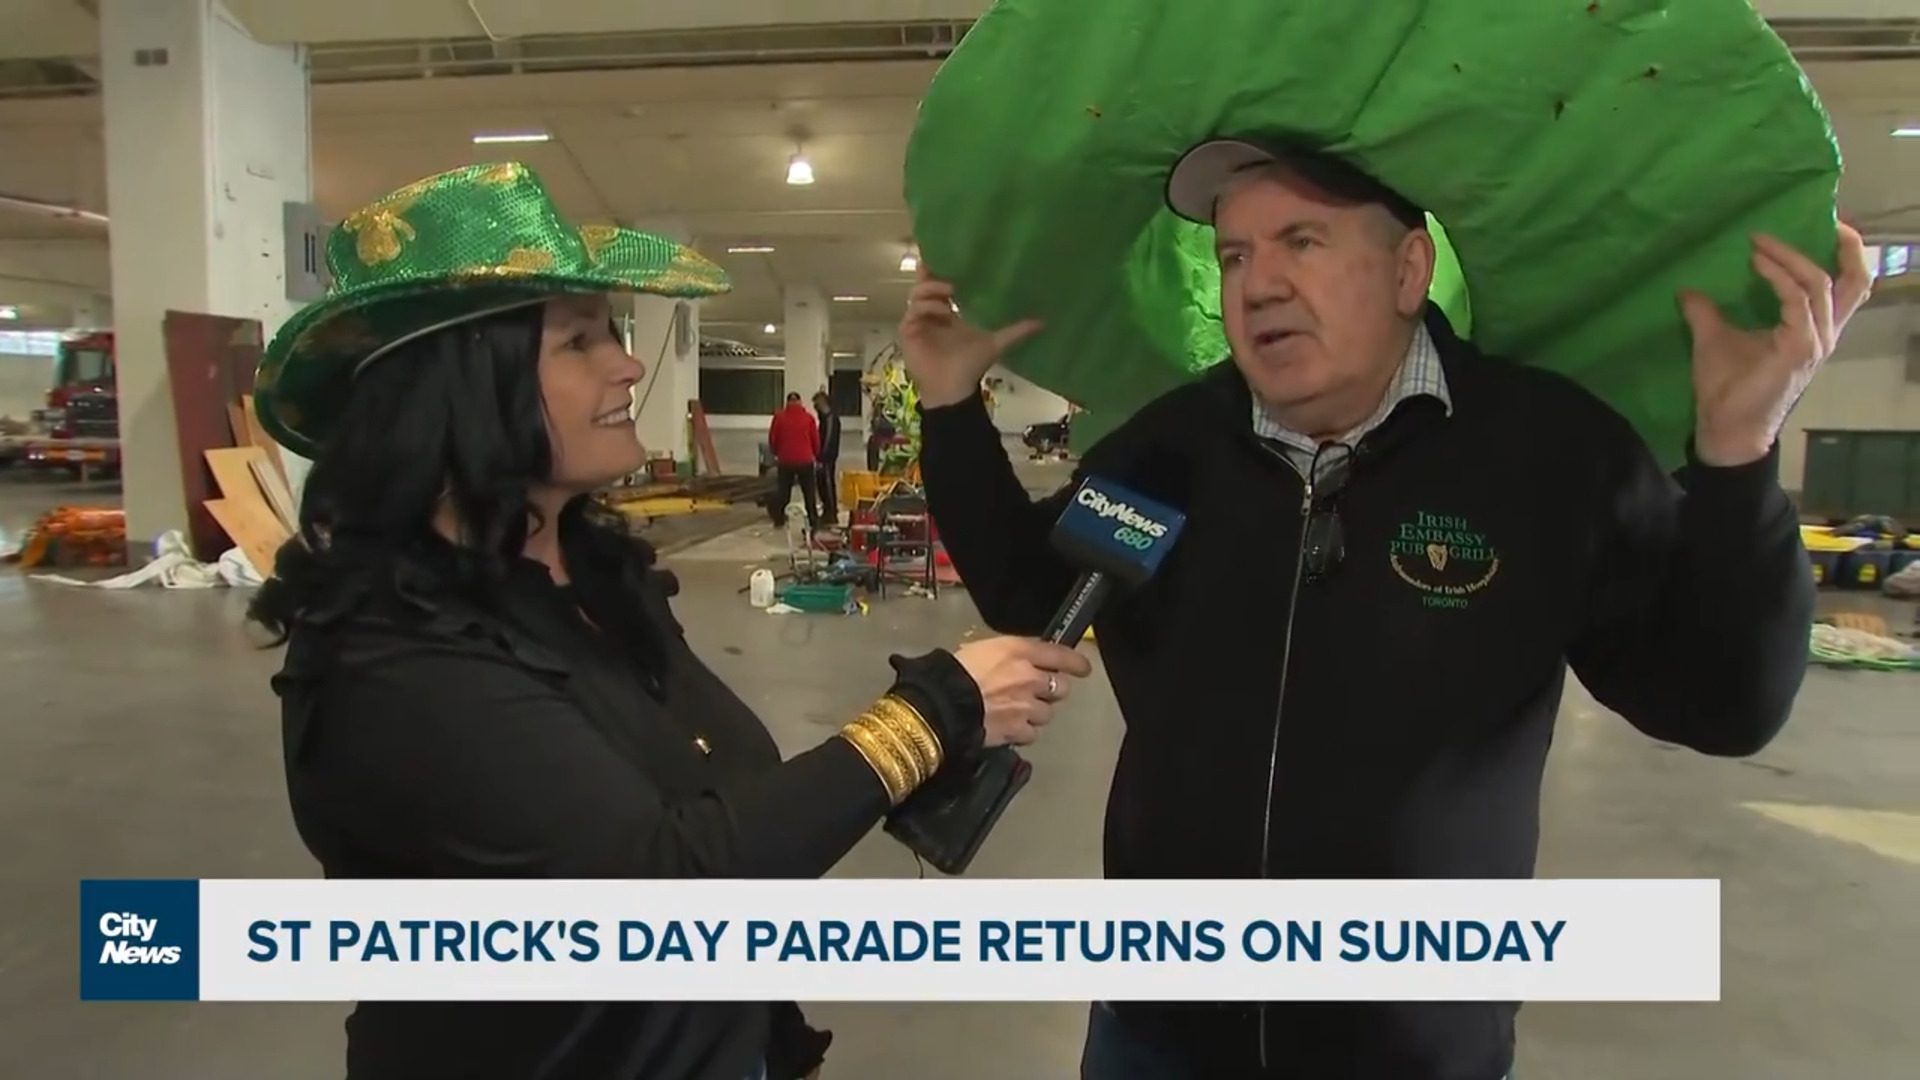 St Patrick's day parade returns to Toronto on Sunday